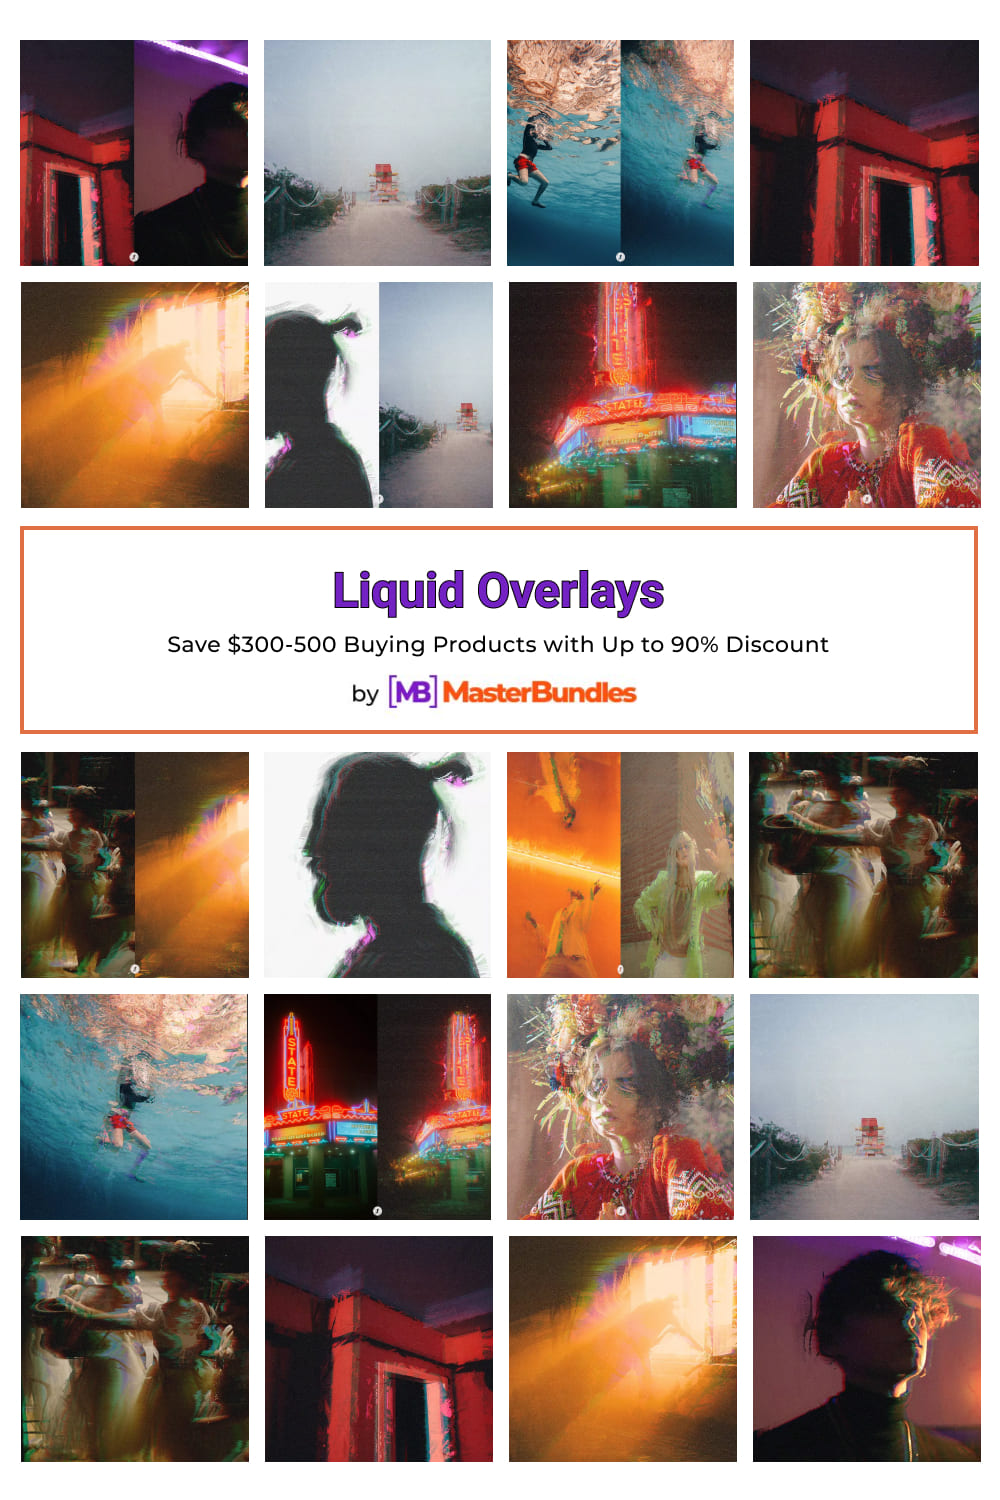 Liquid Overlays Pinterest image.